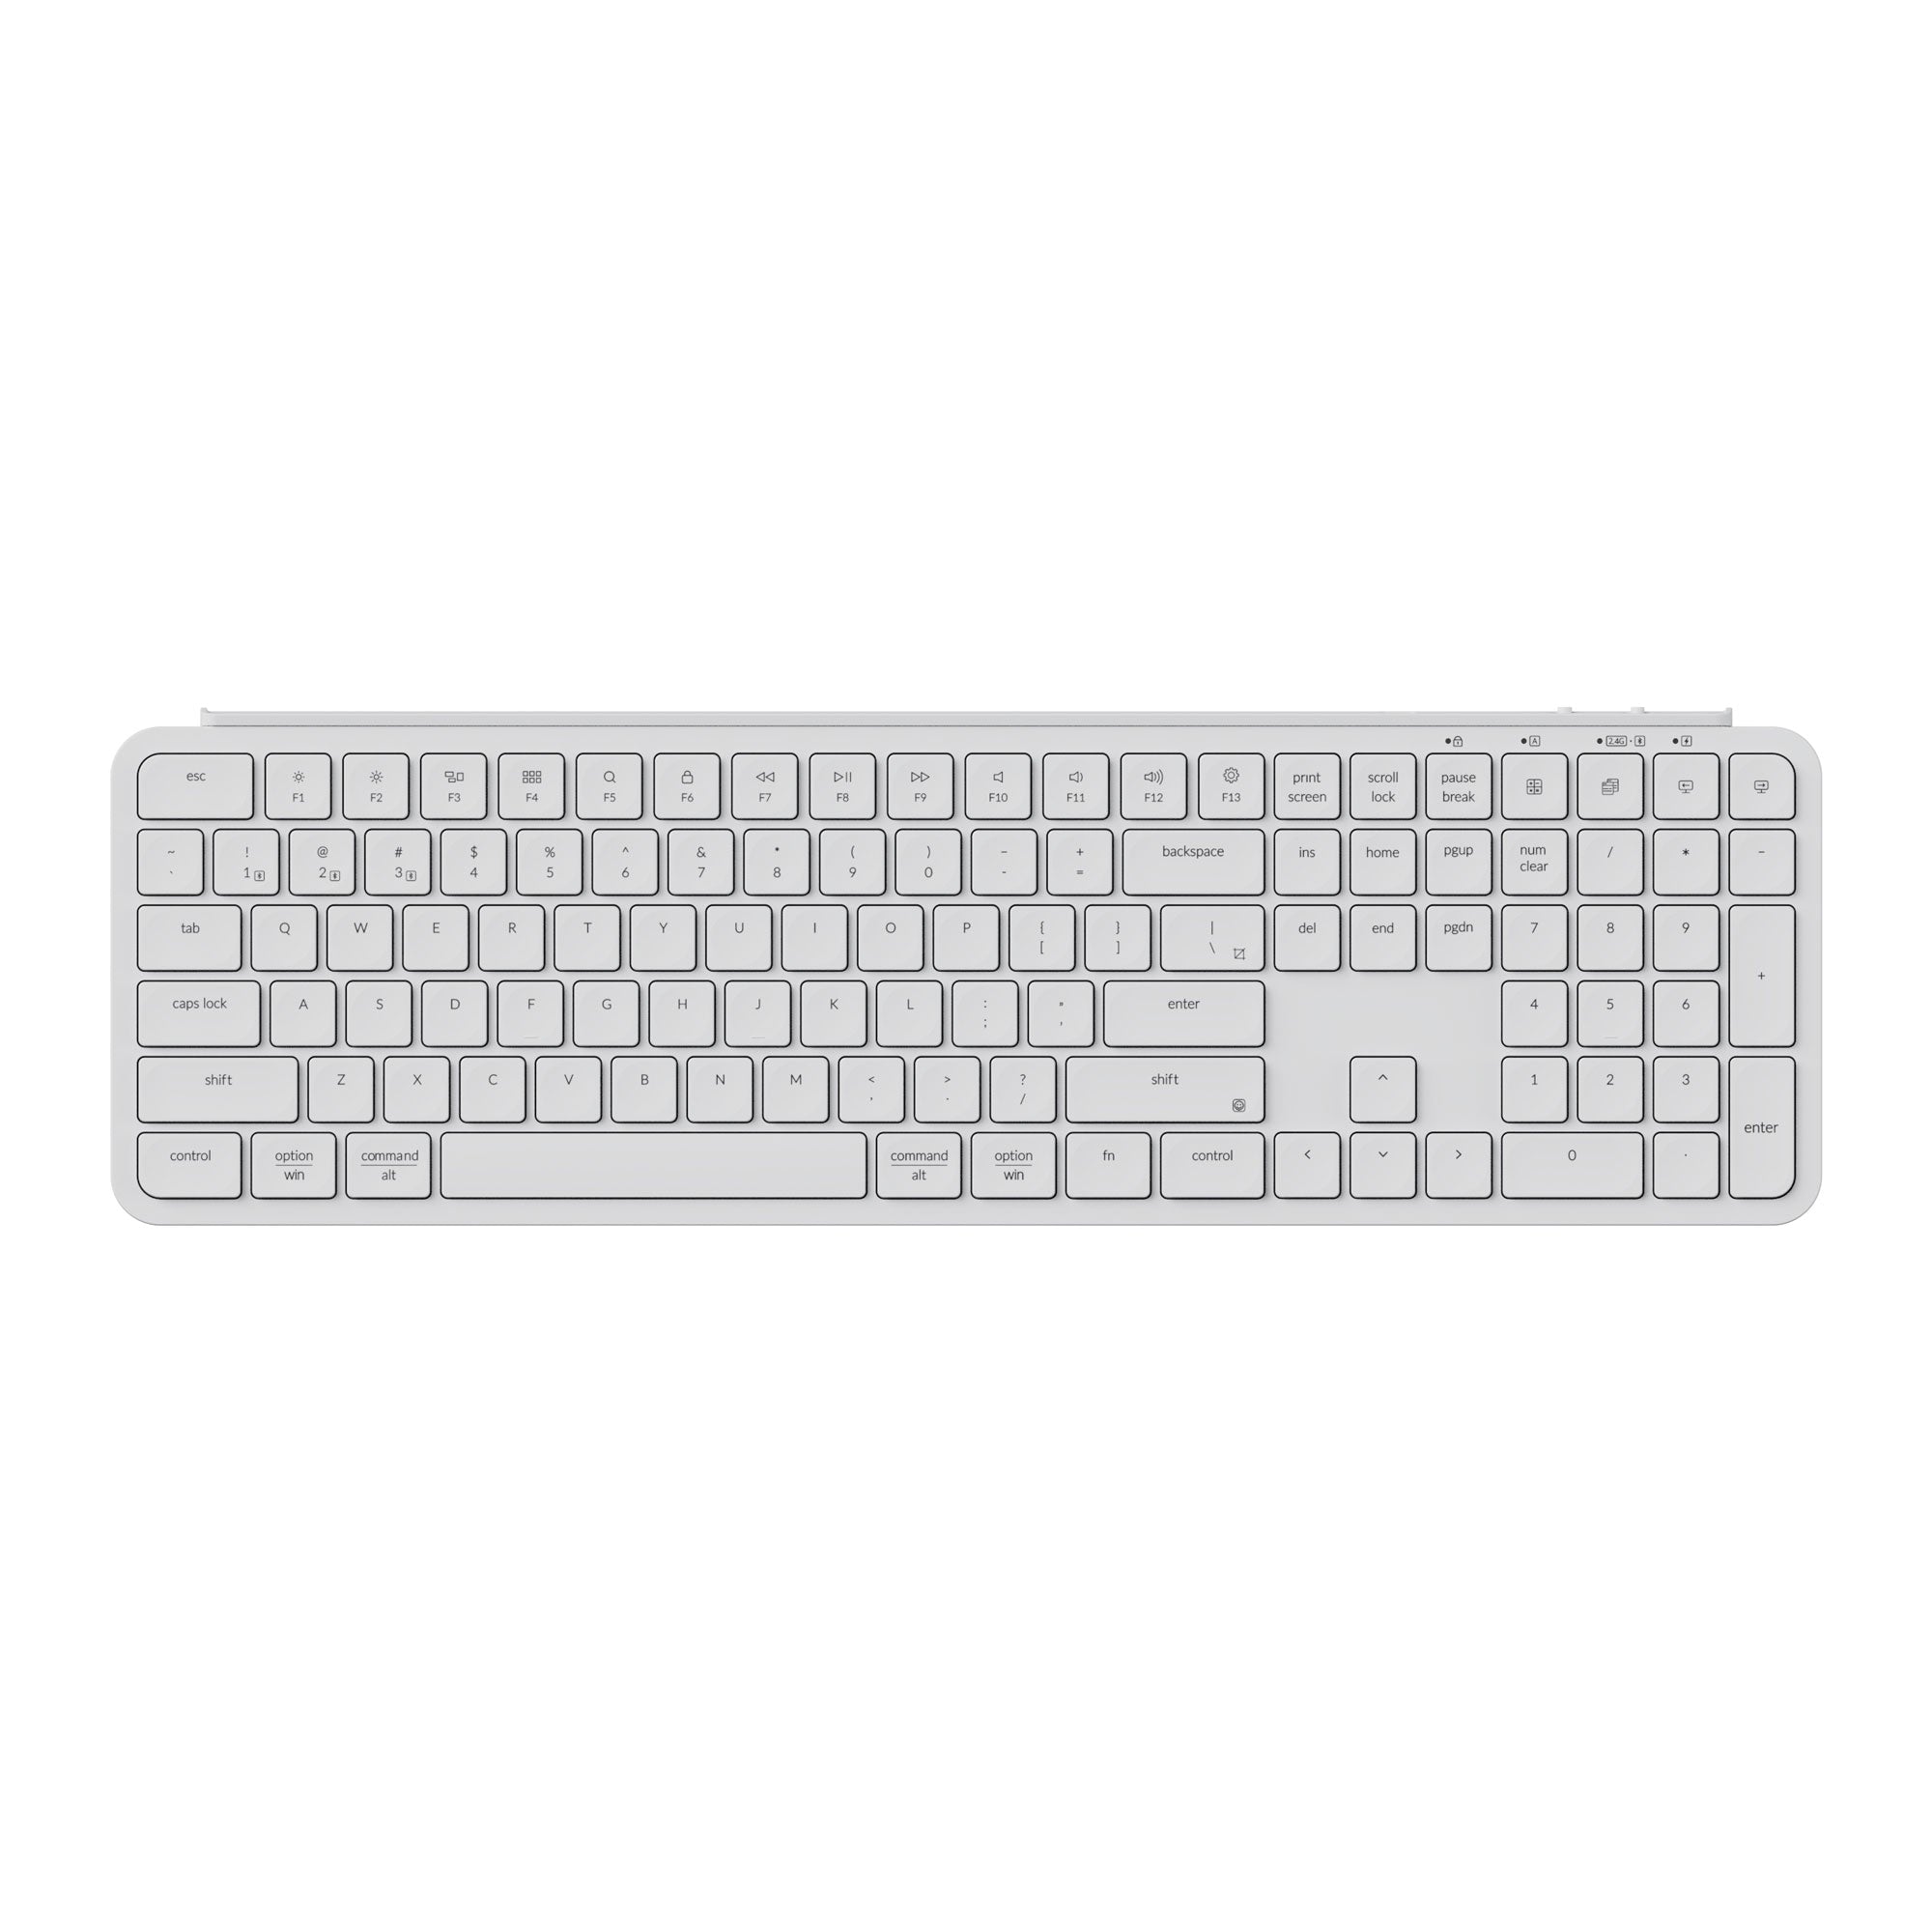 Keychron B6 Pro Ultra Slim Wireless Keyboard full size Layout for Mac Windows Linux Ivory White